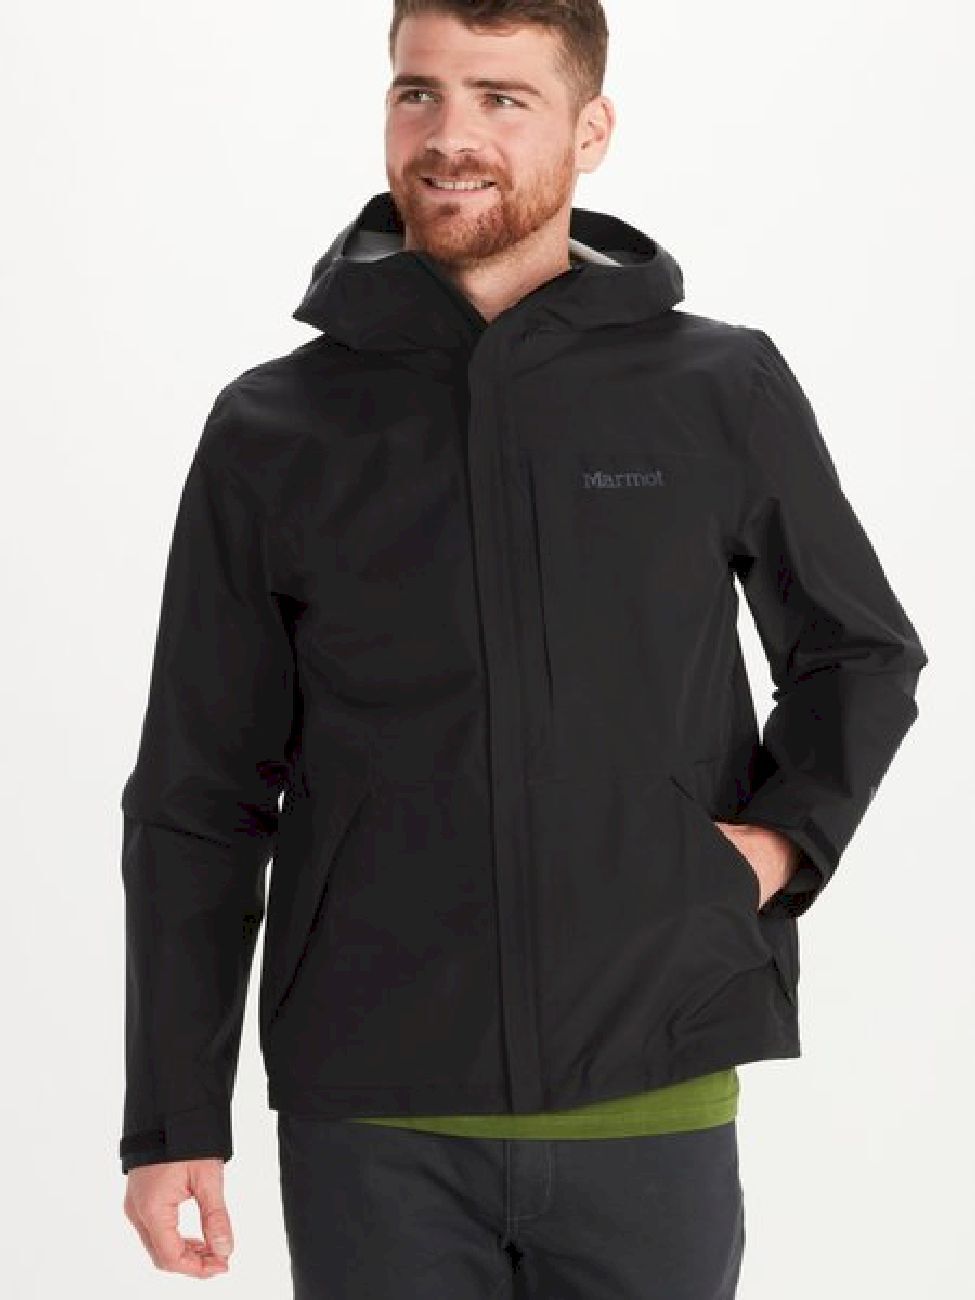 Marmot Minimalist Jacket - Waterproof jacket - Men's